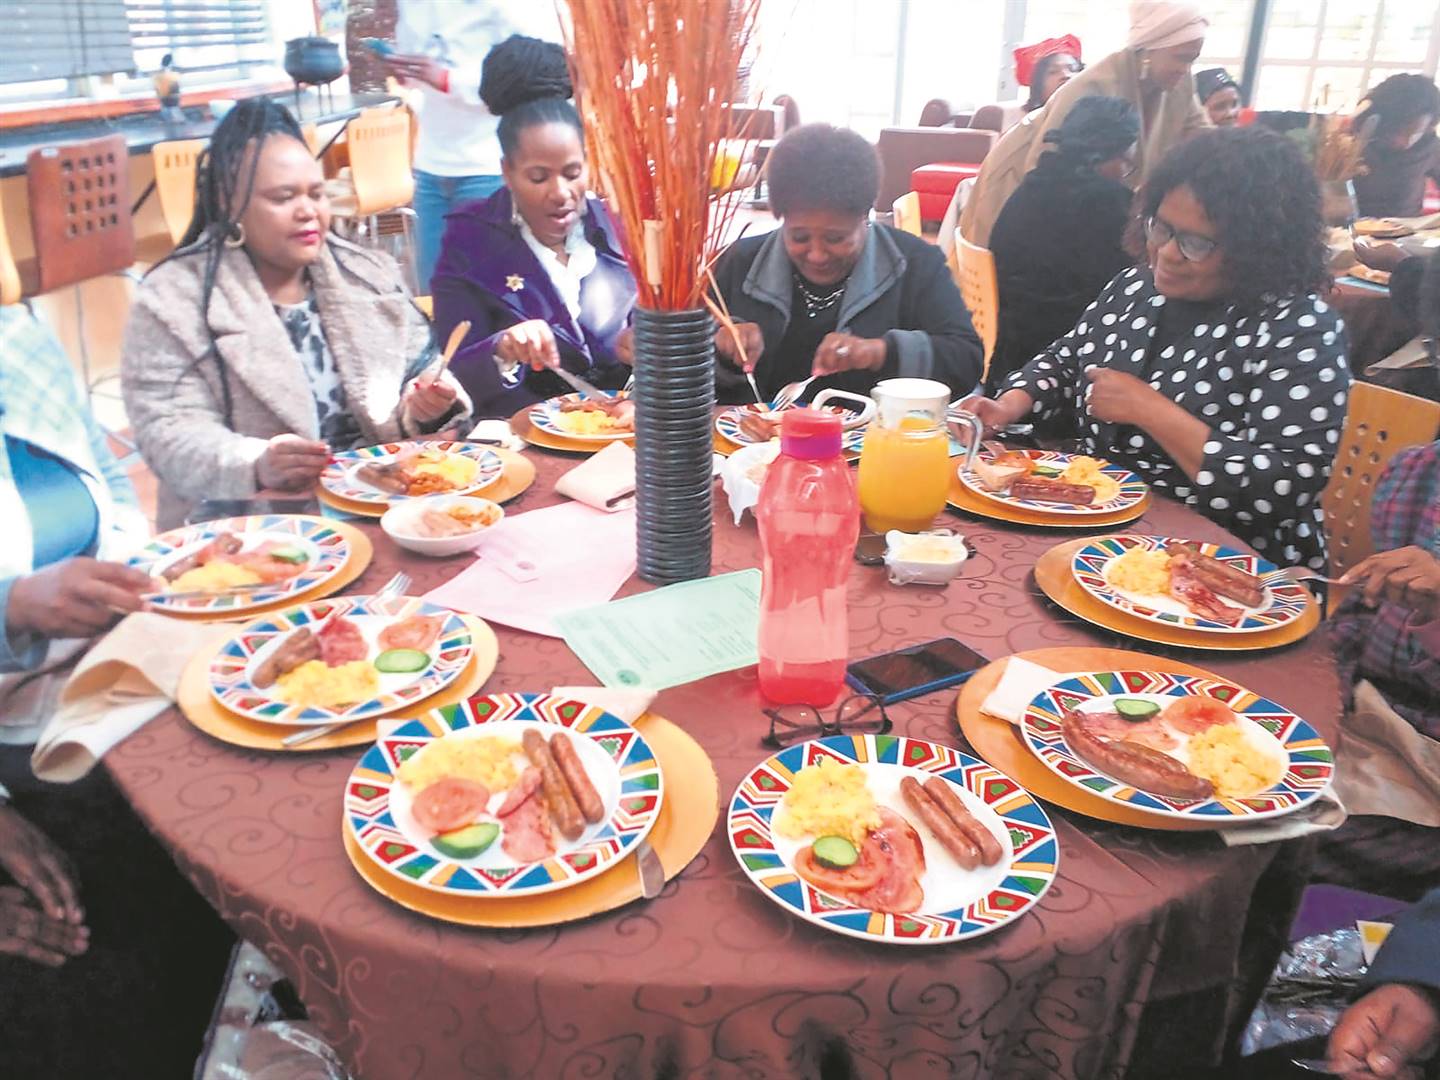 Widows enjoying breakfast at Malibongwe restaurant in Lookout Hill, Khayelitsha at the weekend.                  Photo by Lulekwa Mbadamane